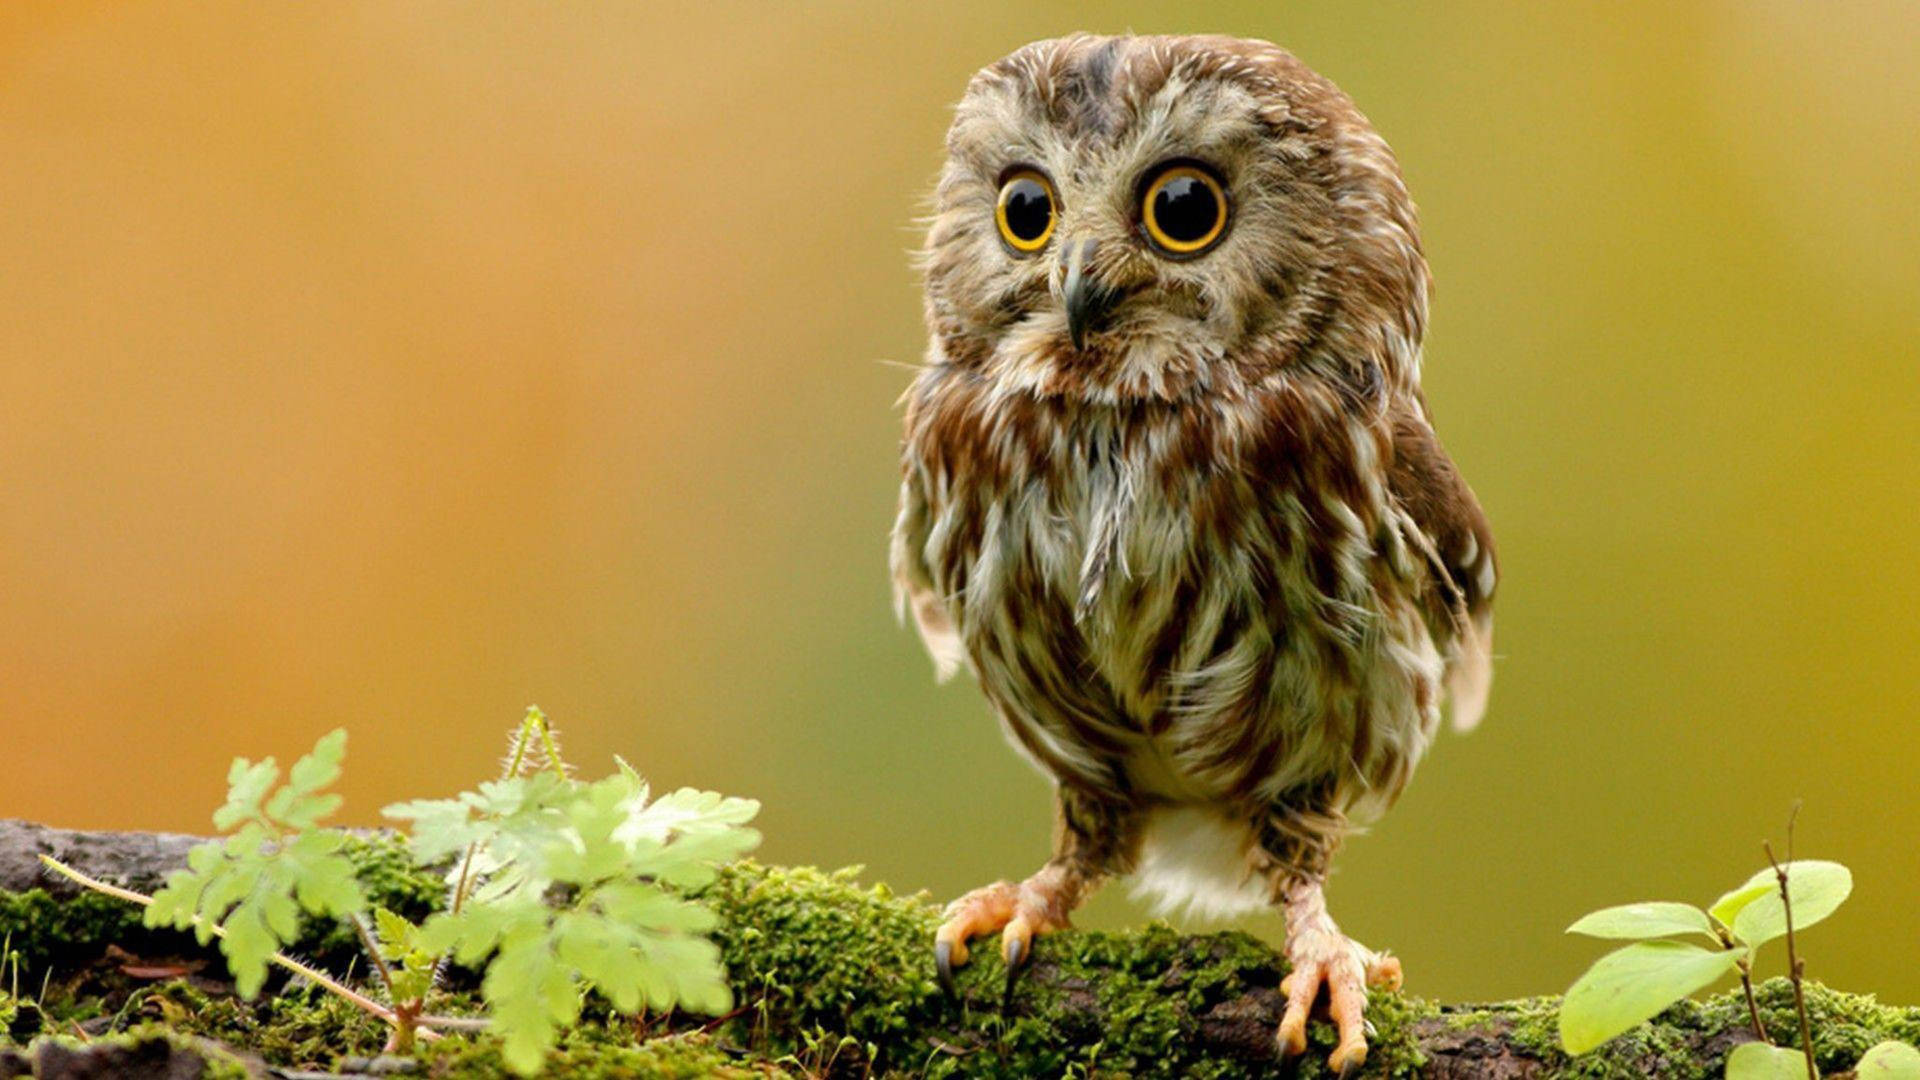 Cute Owl Macro Shot Wallpaper